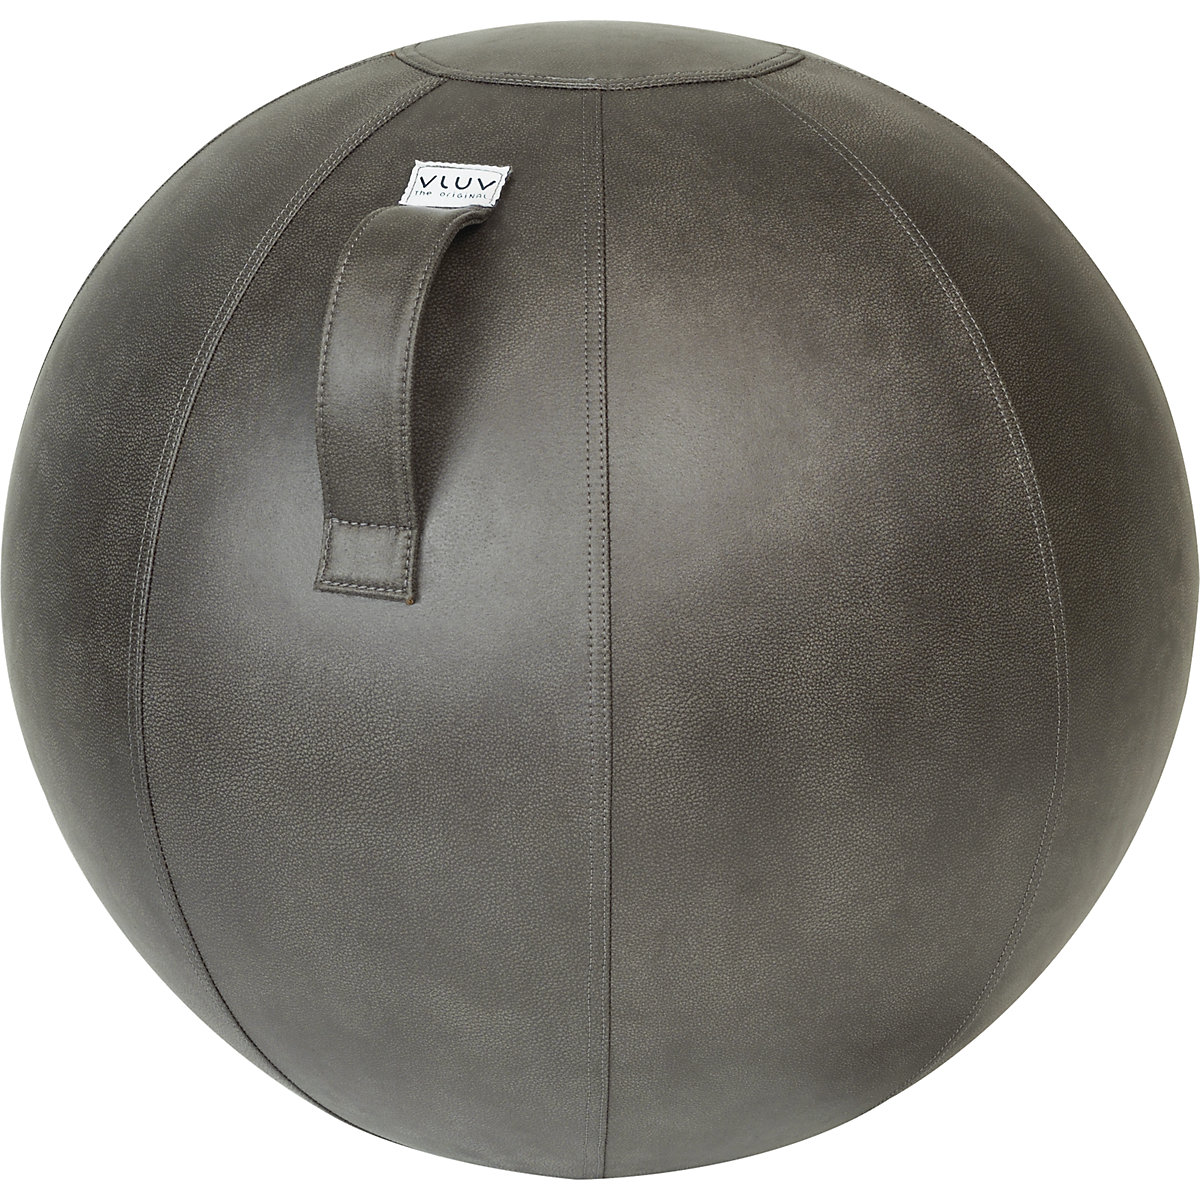 VEEL Swiss ball – VLUV, microfibre vinyl, 600 – 650 mm, elephant